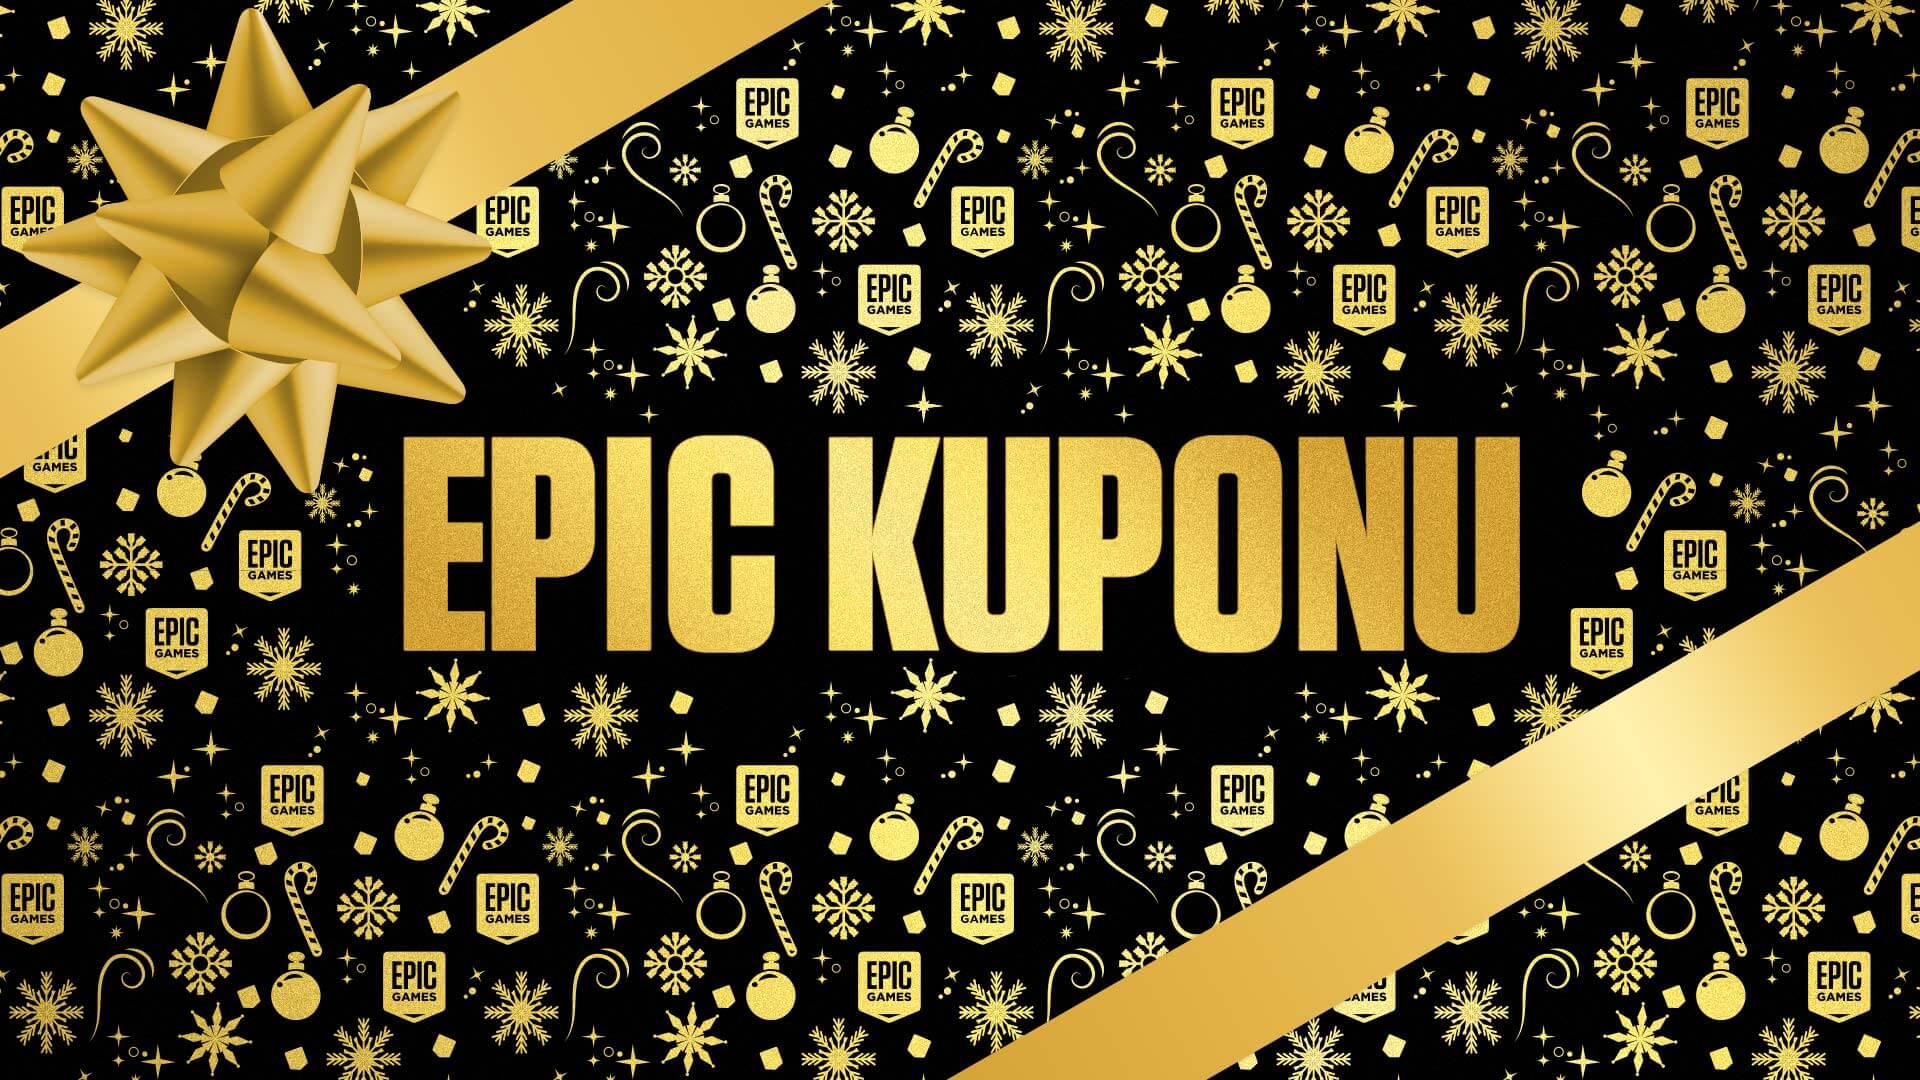 epic-games-60-tl-kupon-teknosafari